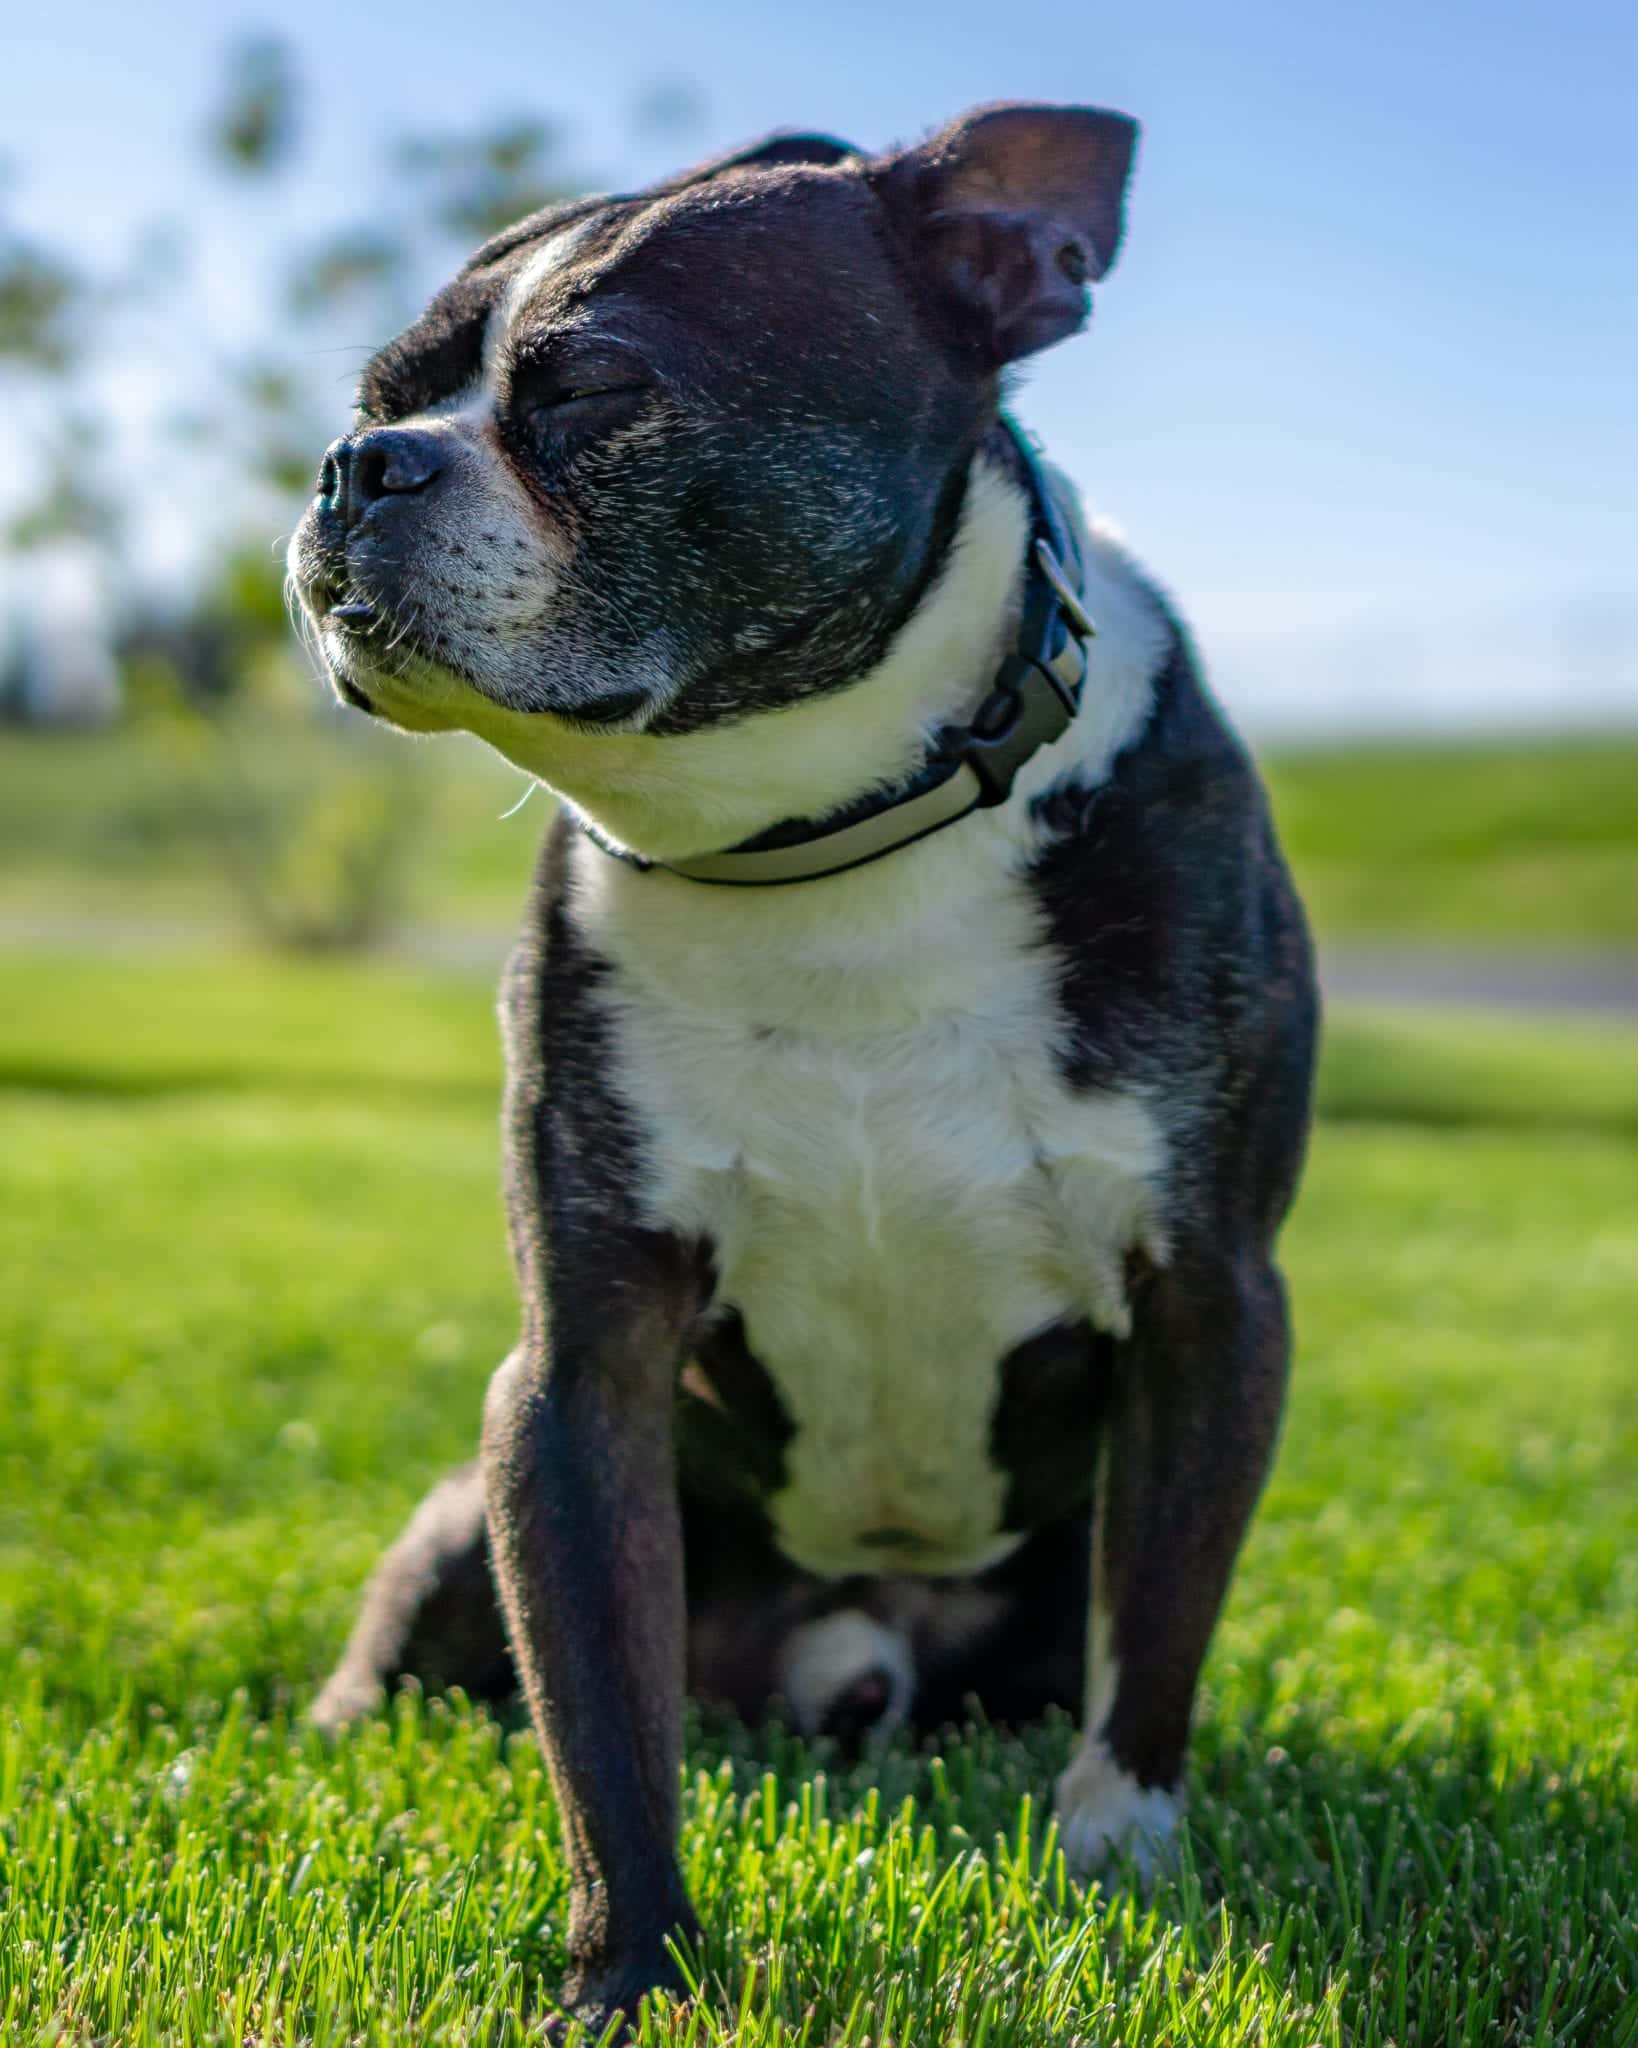 Dog enjoying outdoors: Pet Tributes in Centennial